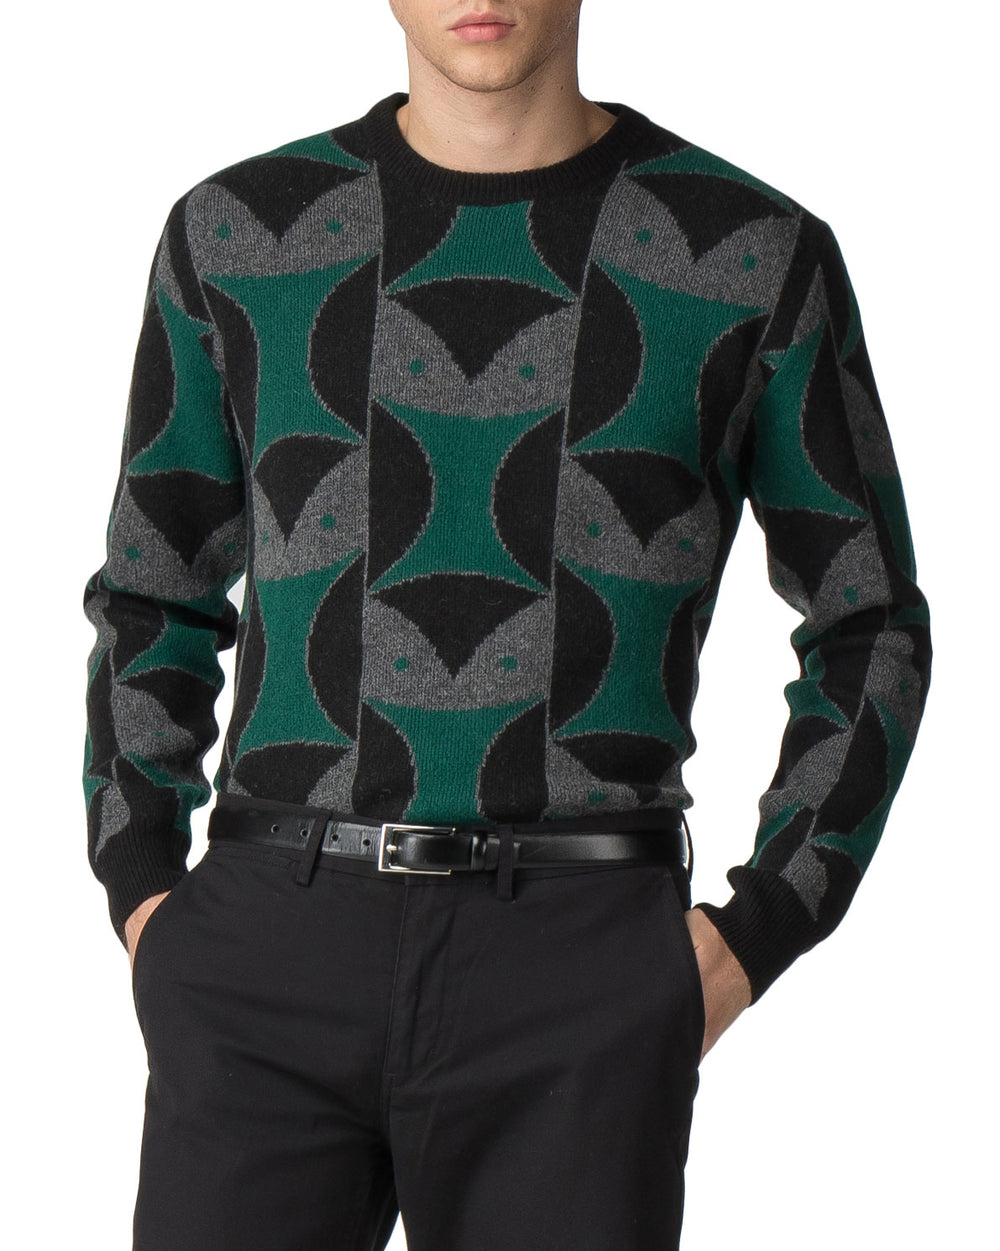 Owl Jacquard Sweater - Black